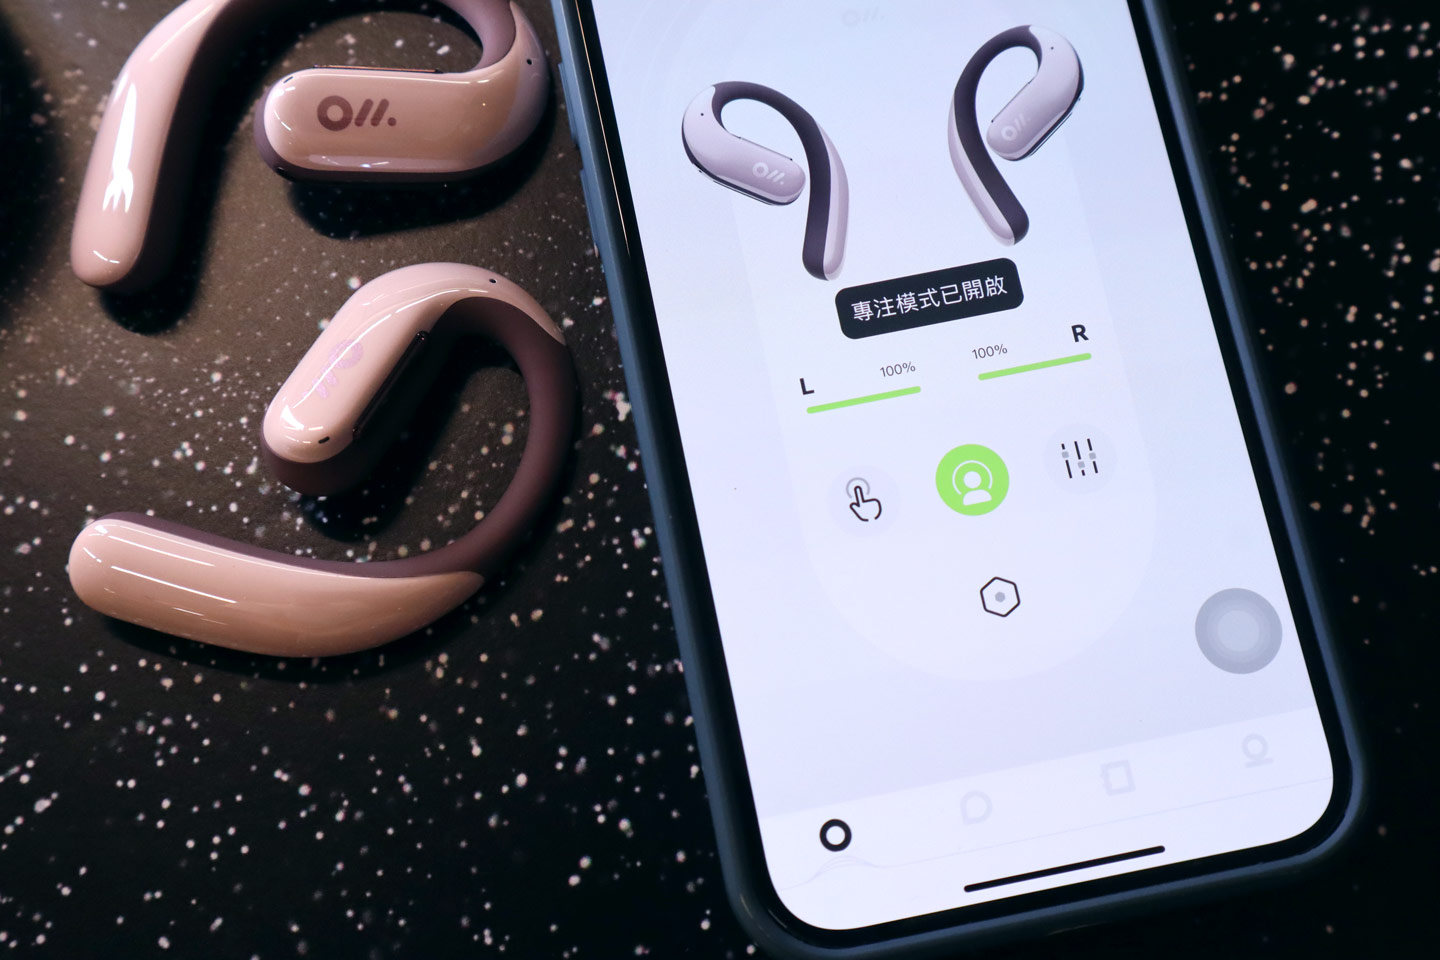 Oladance  擁有 OWS（Open Wearable Stereo）專利技術，於 2021 年推出全開放式 OWS 1 耳機之後，積極聽取用家的意見並加以改良，最近推出了 OWS Pro，集合了人體工學概念與品牌多款專利音頻技術於一身。